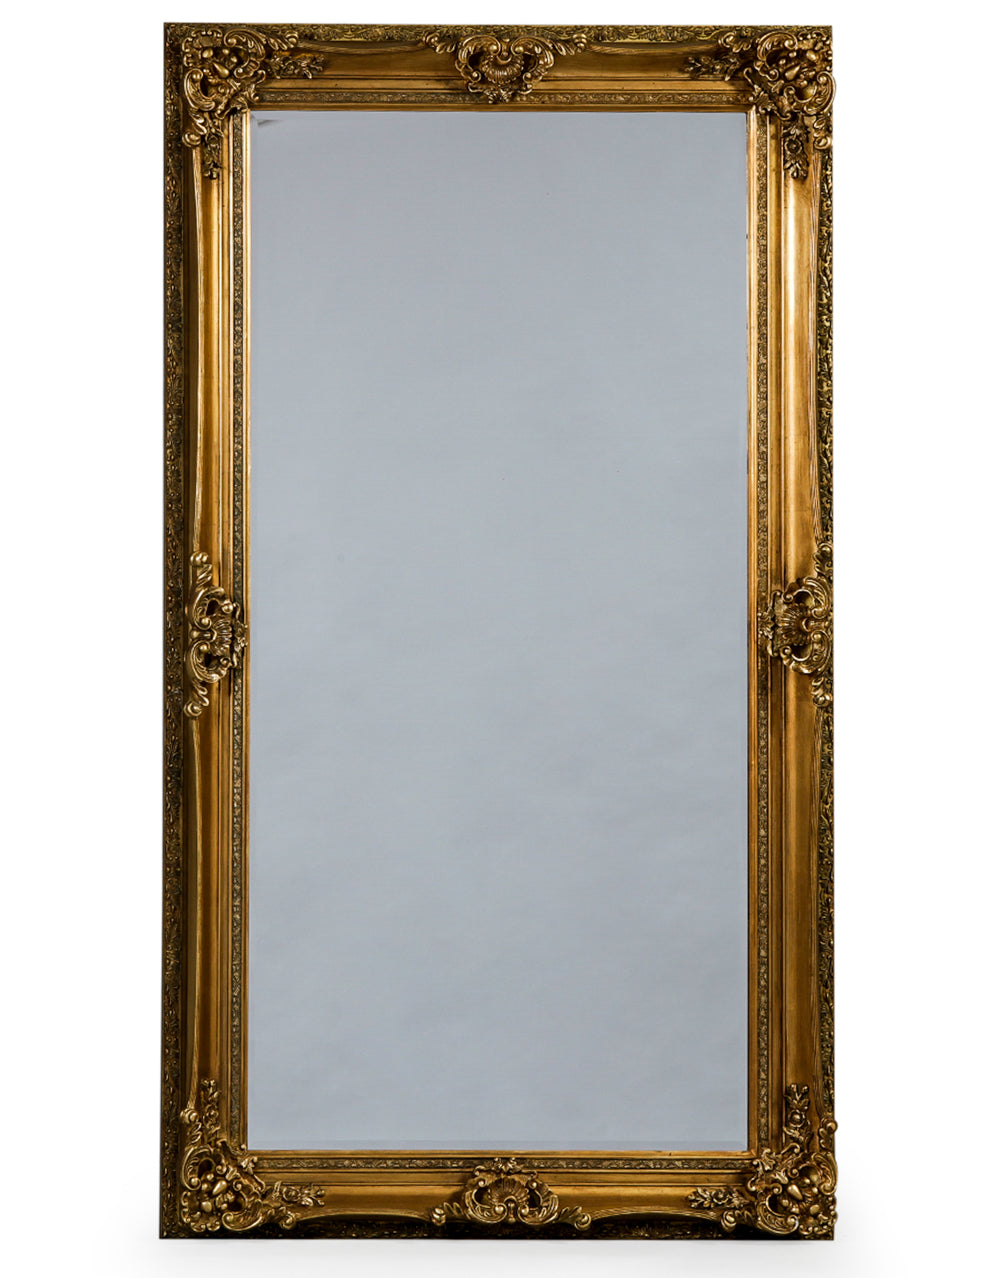 Antique Gold Large Regal Mirror